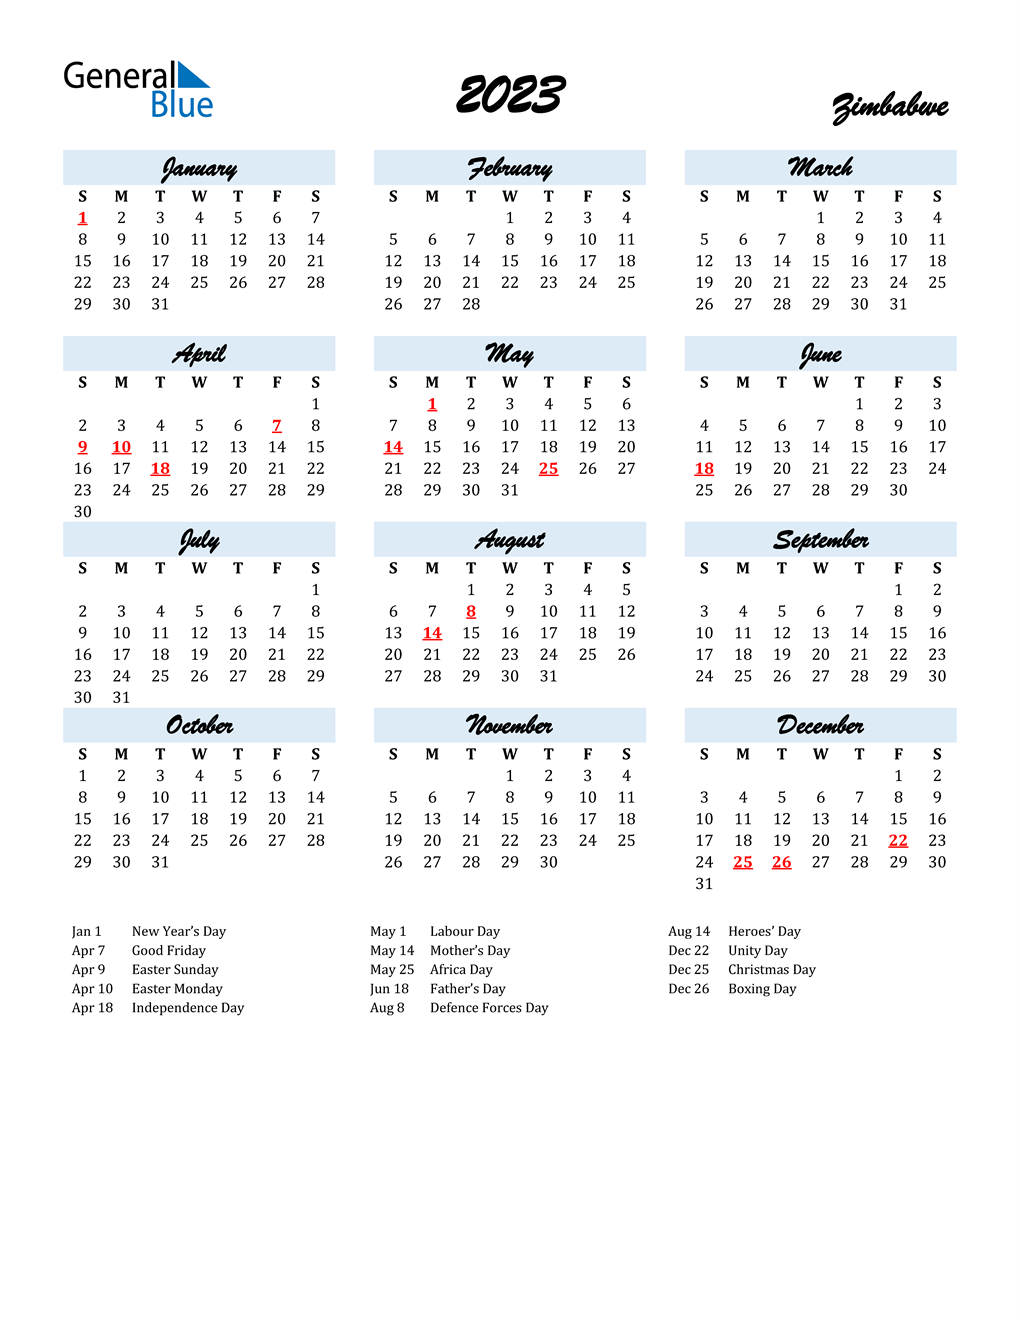 2023 Zimbabwe Calendar with Holidays